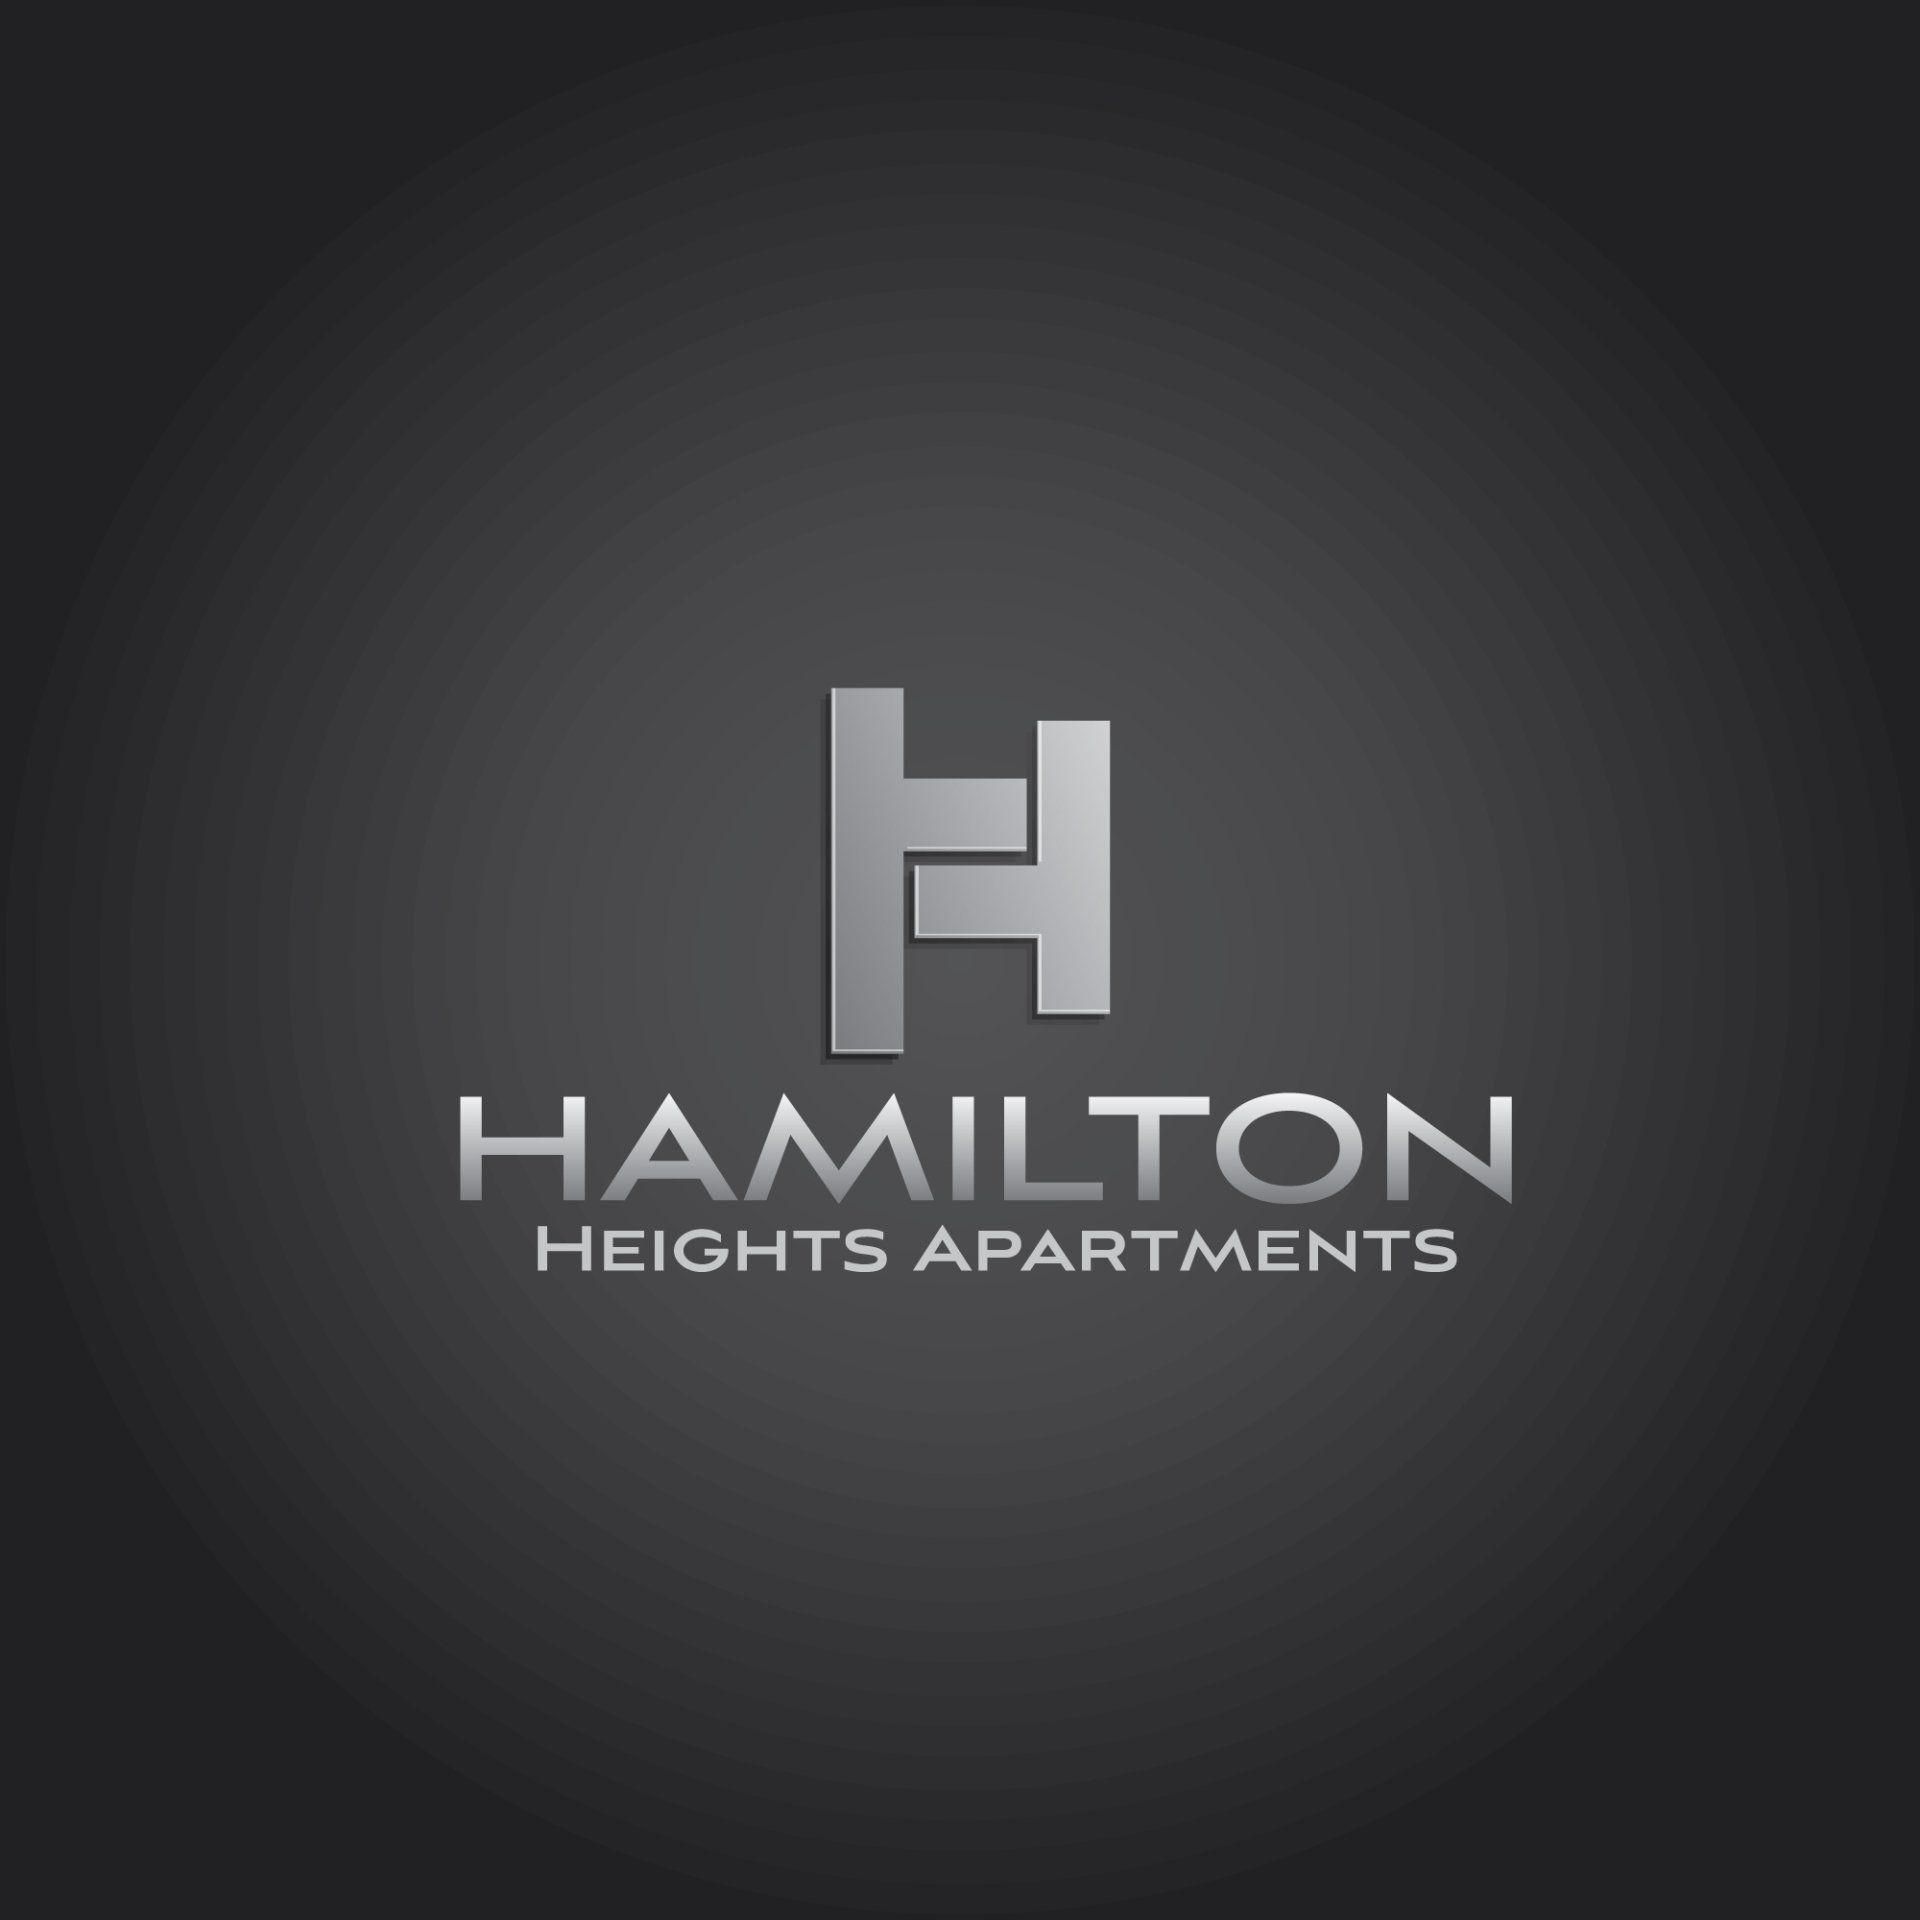 Hamilton Heights Apartments Logo